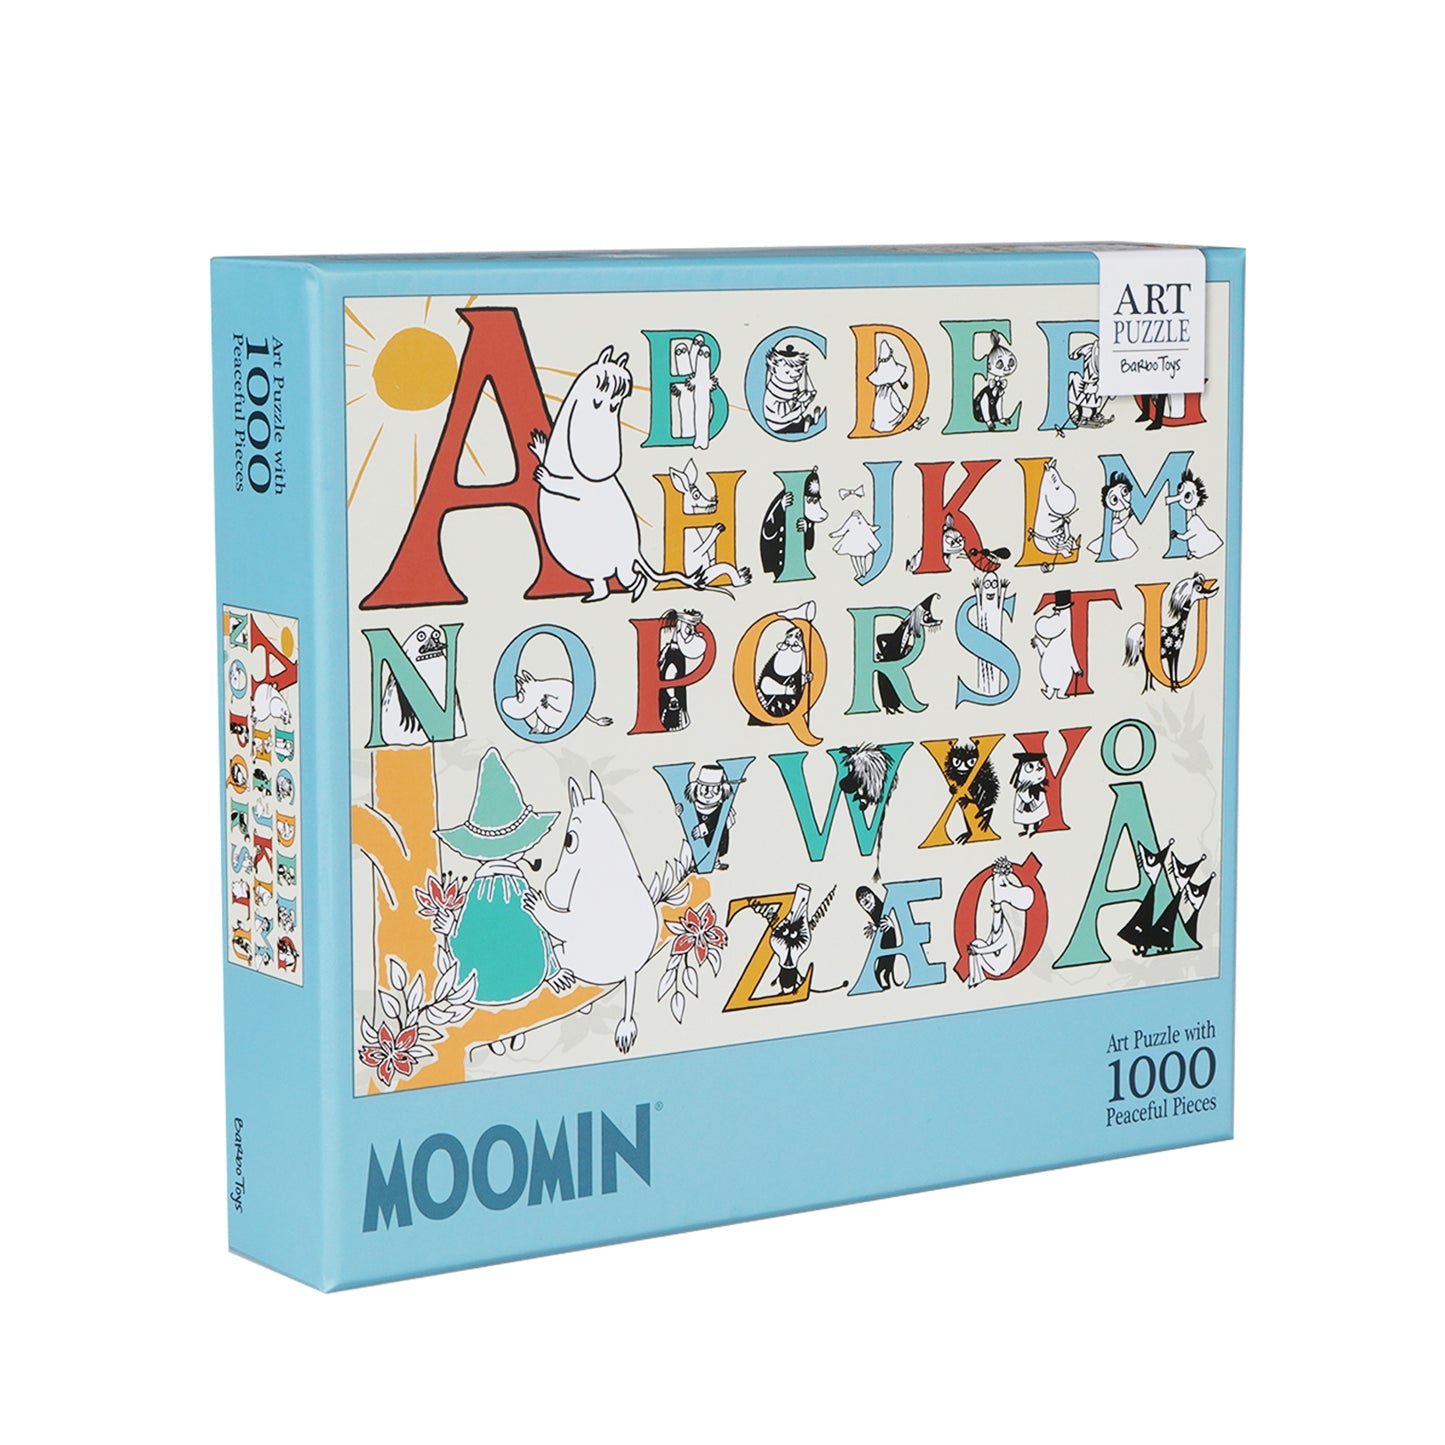 Moomin Art Puzzle - 1000 pcs - ABC